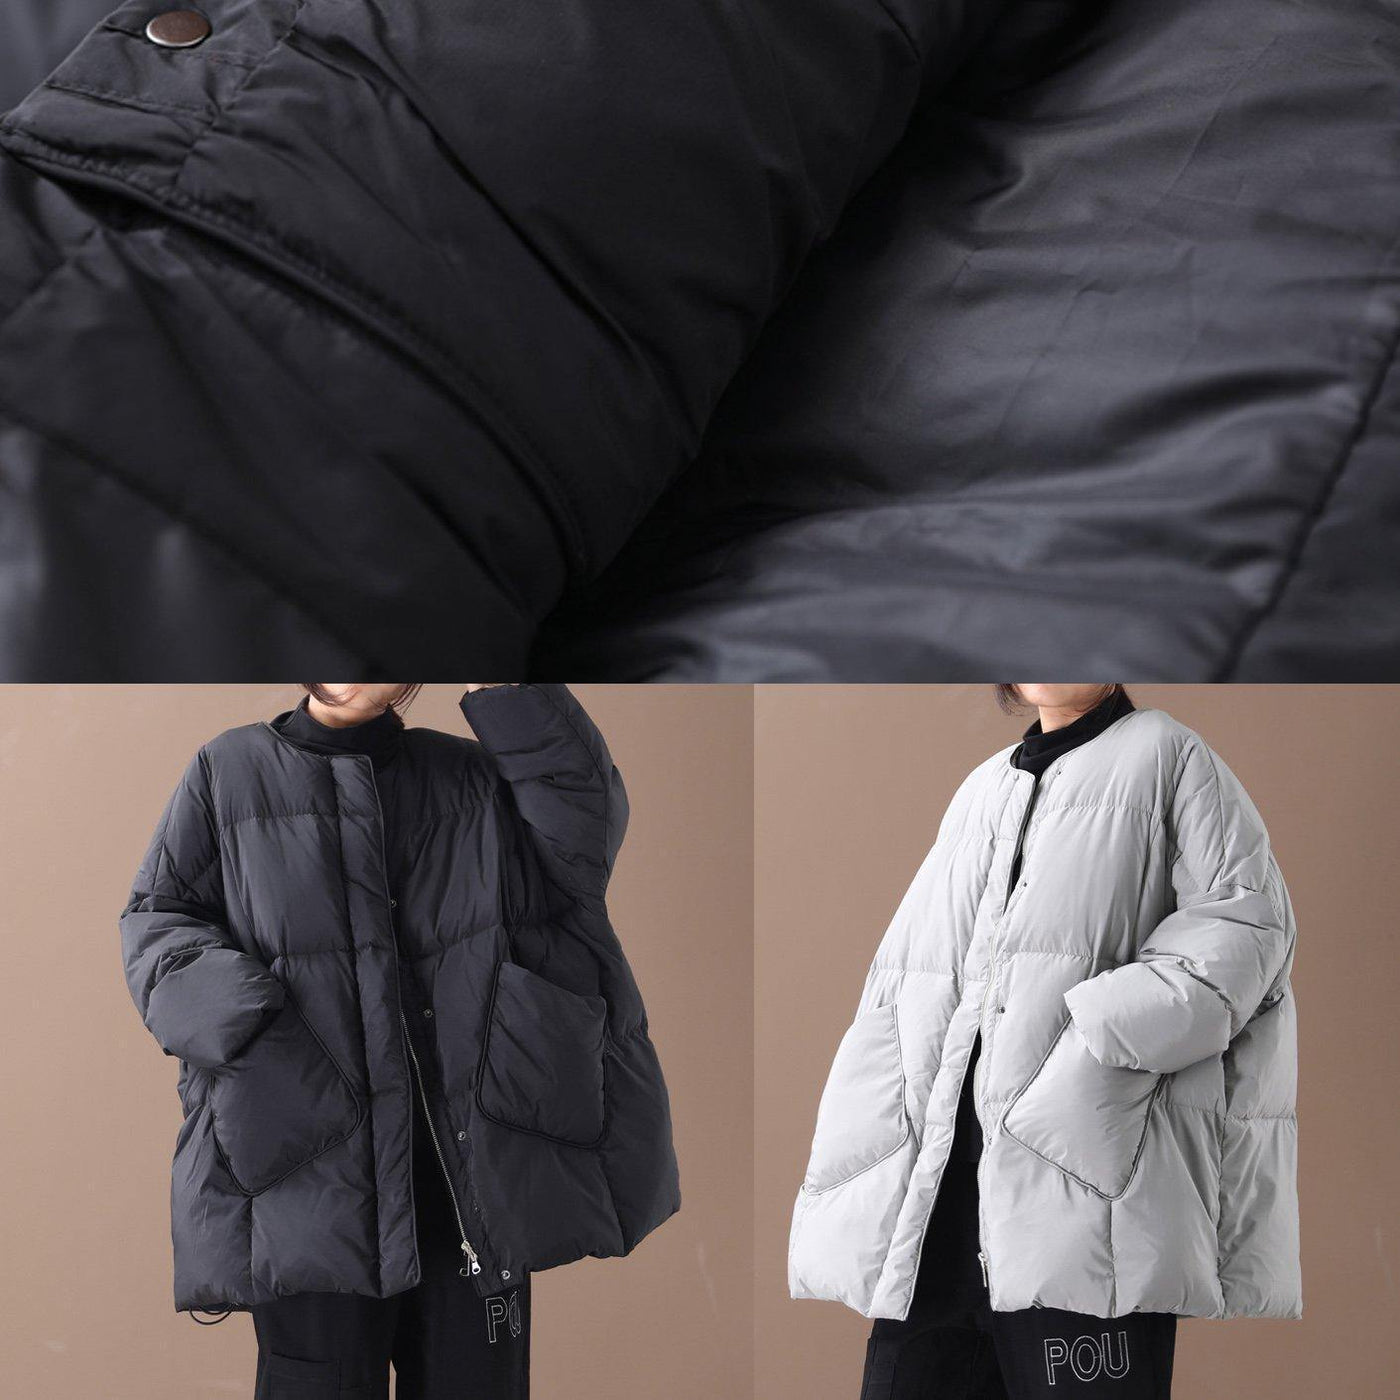 women oversized winter jacket winter coats black Button Down coat